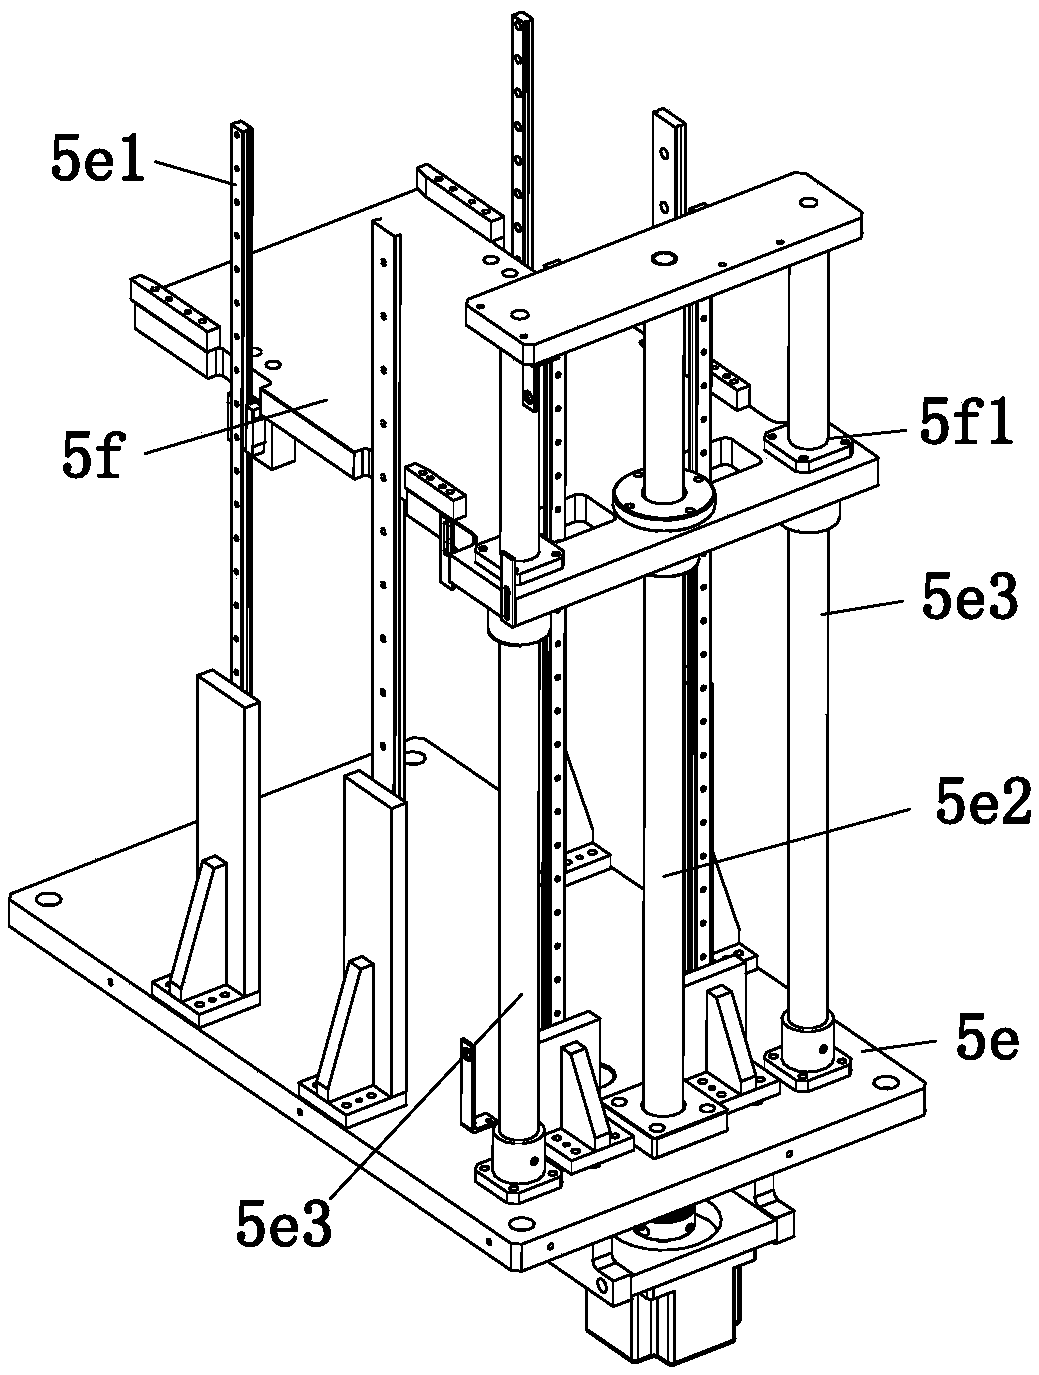 An ear-folding mechanism for metal plate punching and folding earphones